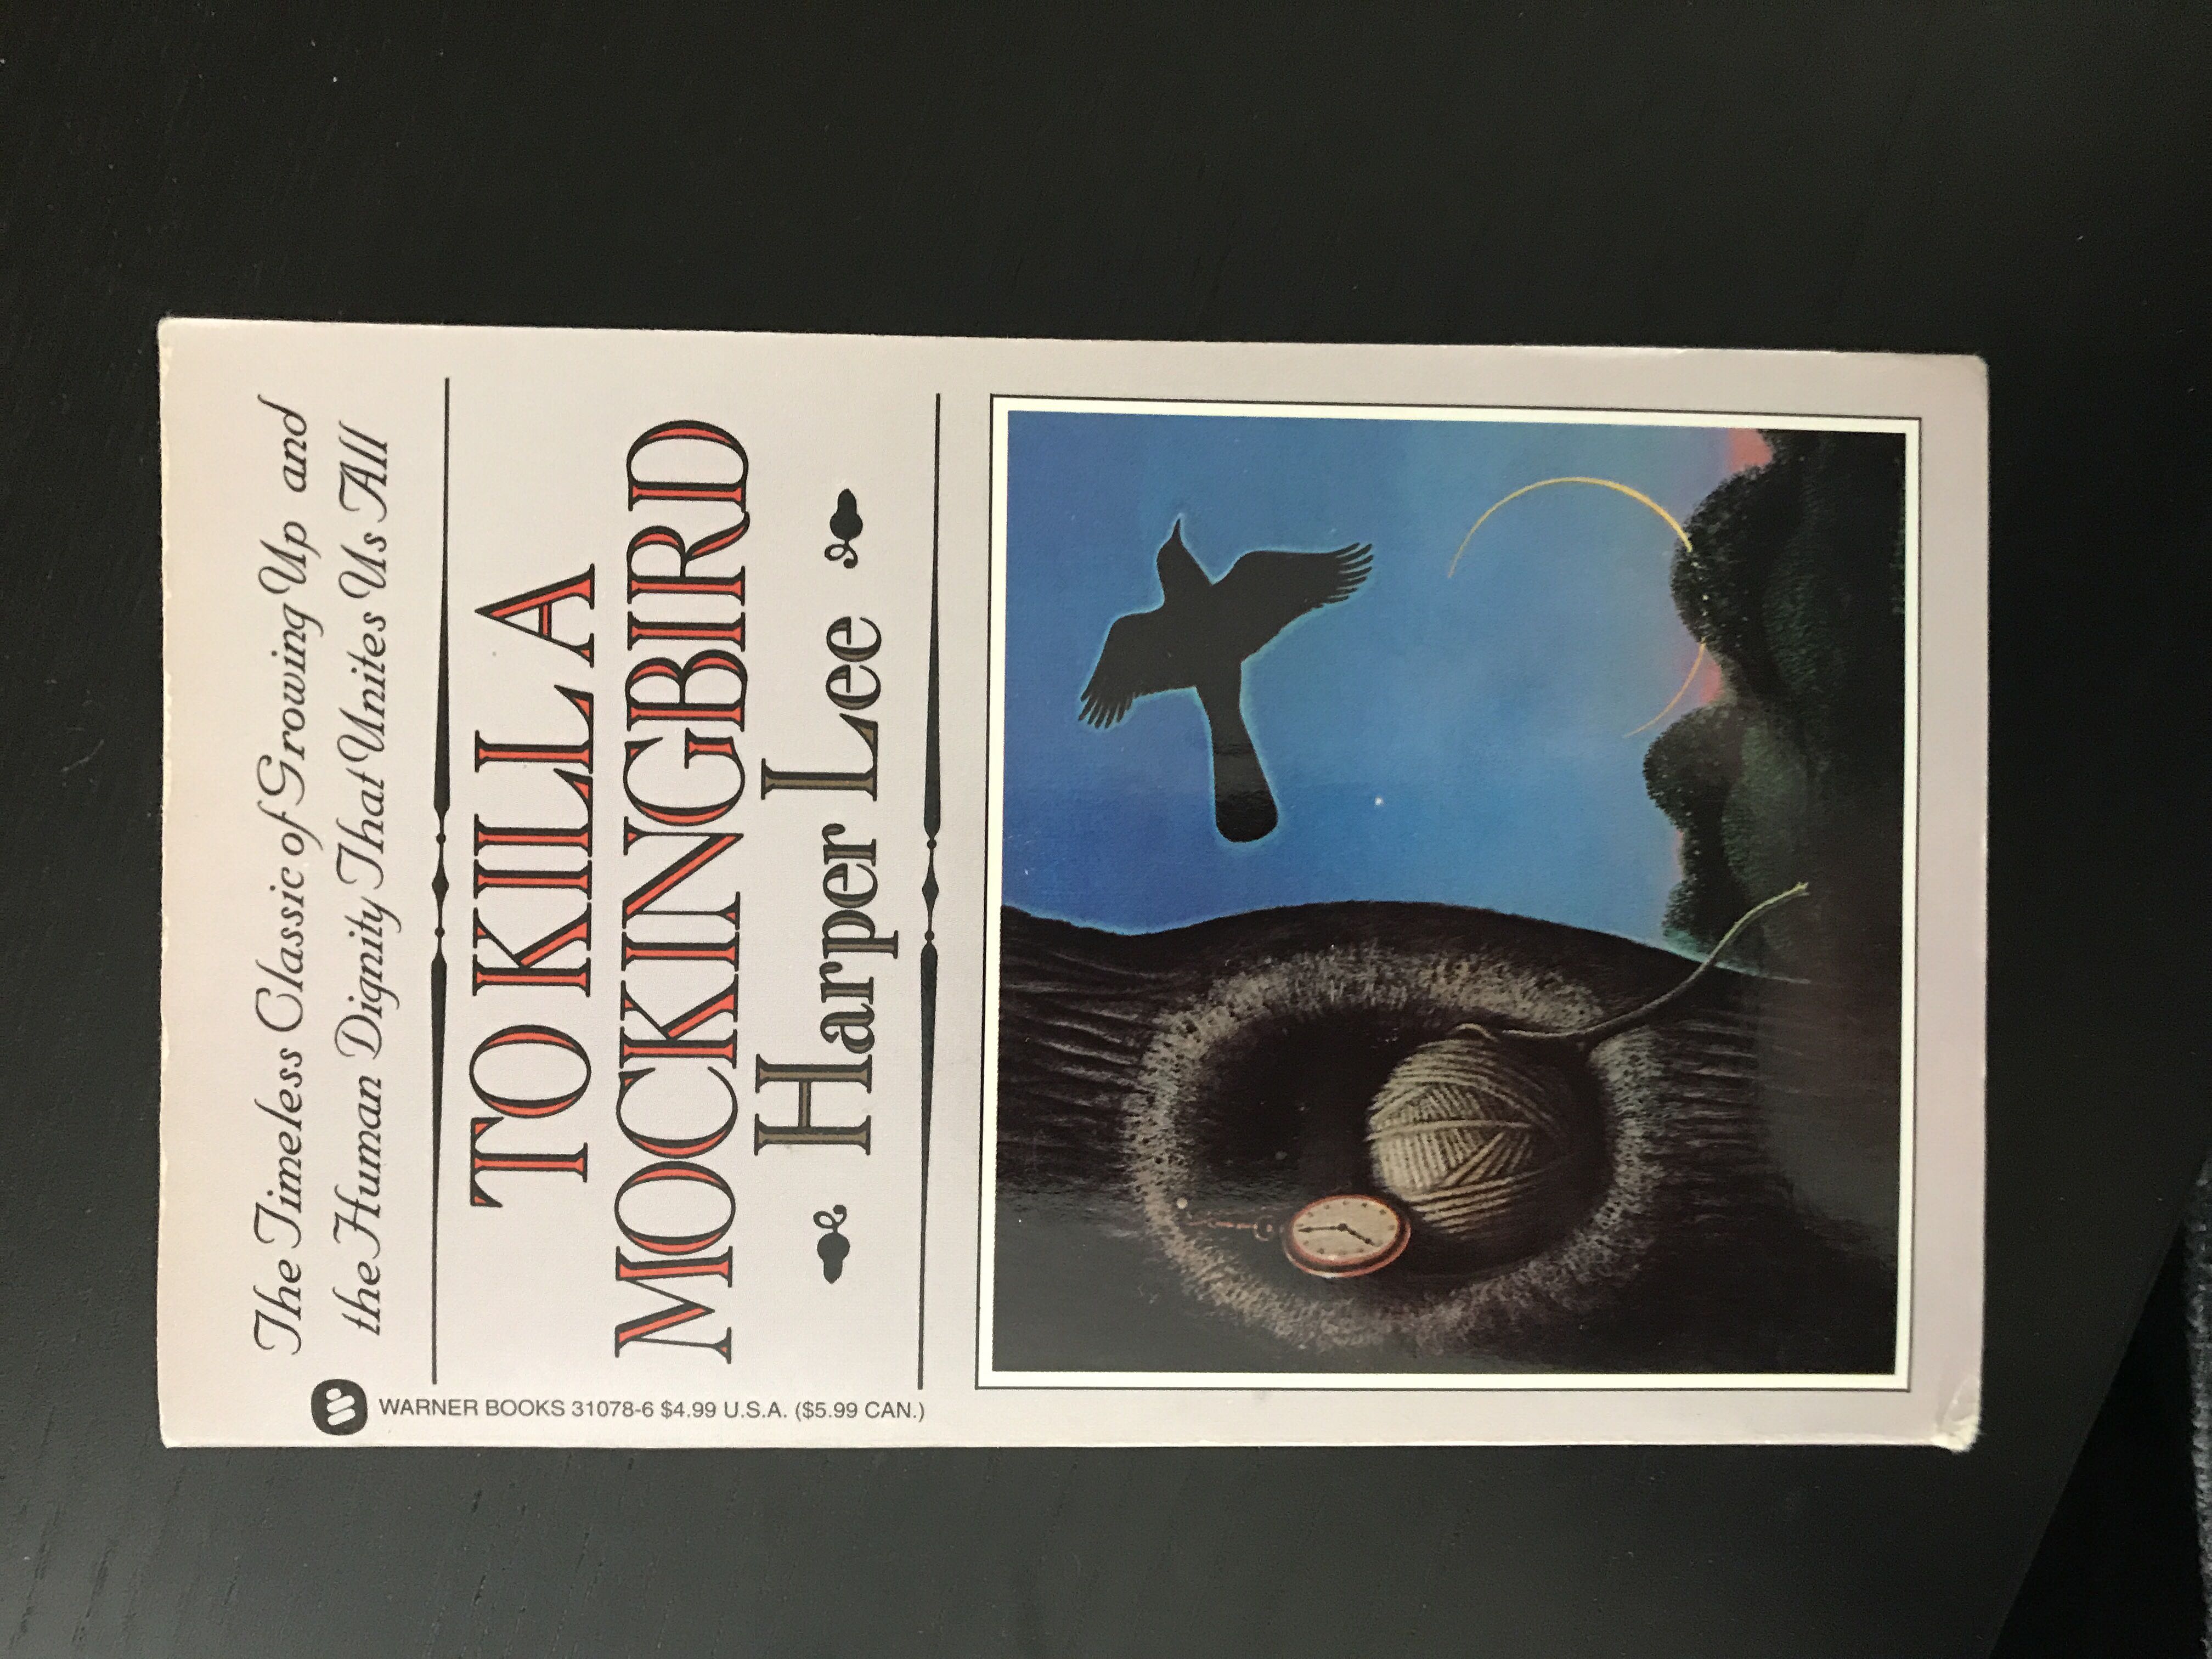 To Kill a Mockingbird - Harper Lee (Warner Books - Paperback) book collectible [Barcode 9780446310789] - Main Image 3